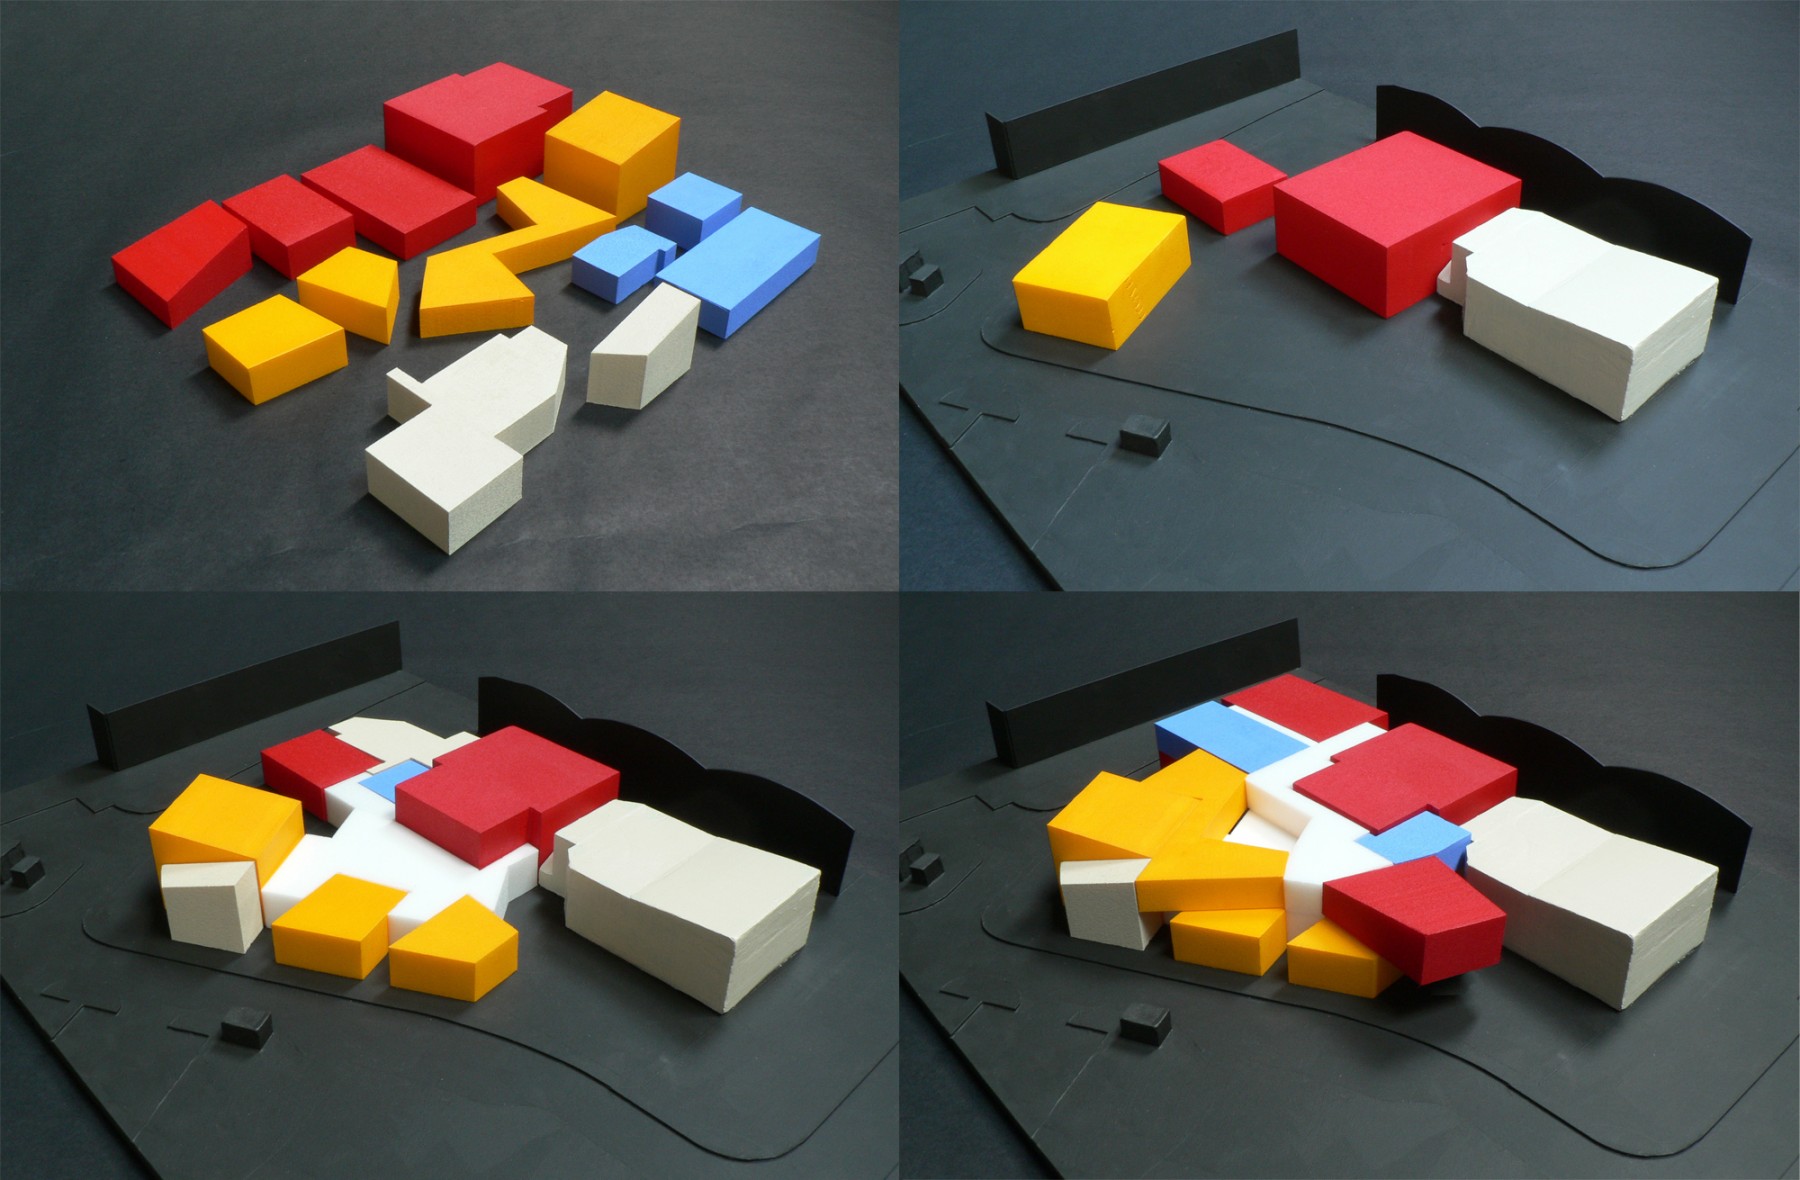 University-Bath-Creative-Arts-Centre-short-list-education-somerset-campus-theatre-Jamie-Fobert-architects-model-blocks